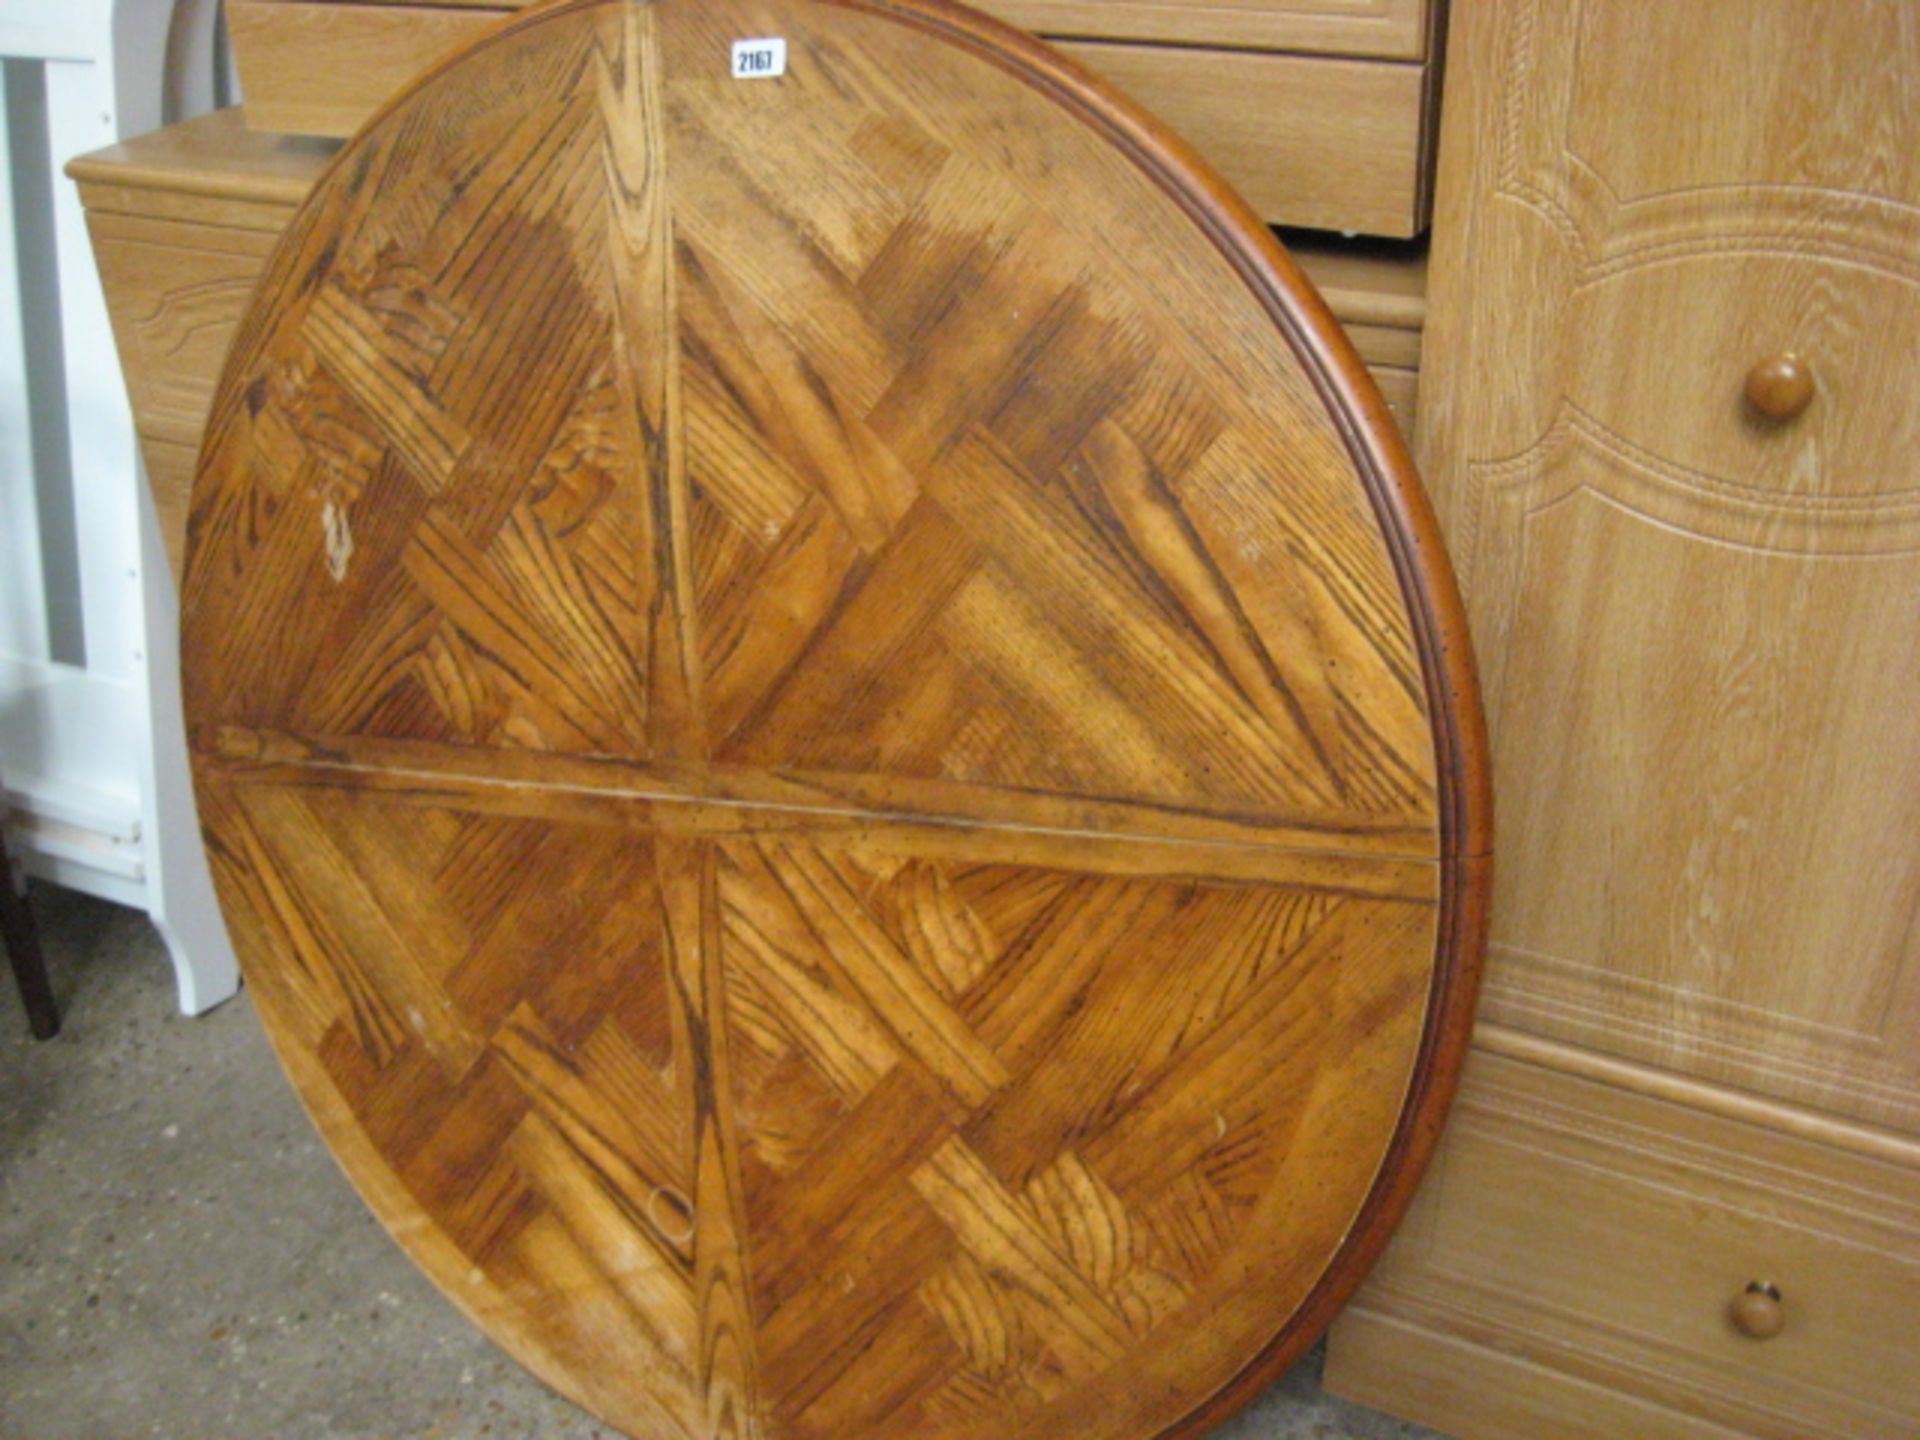 Circular table top